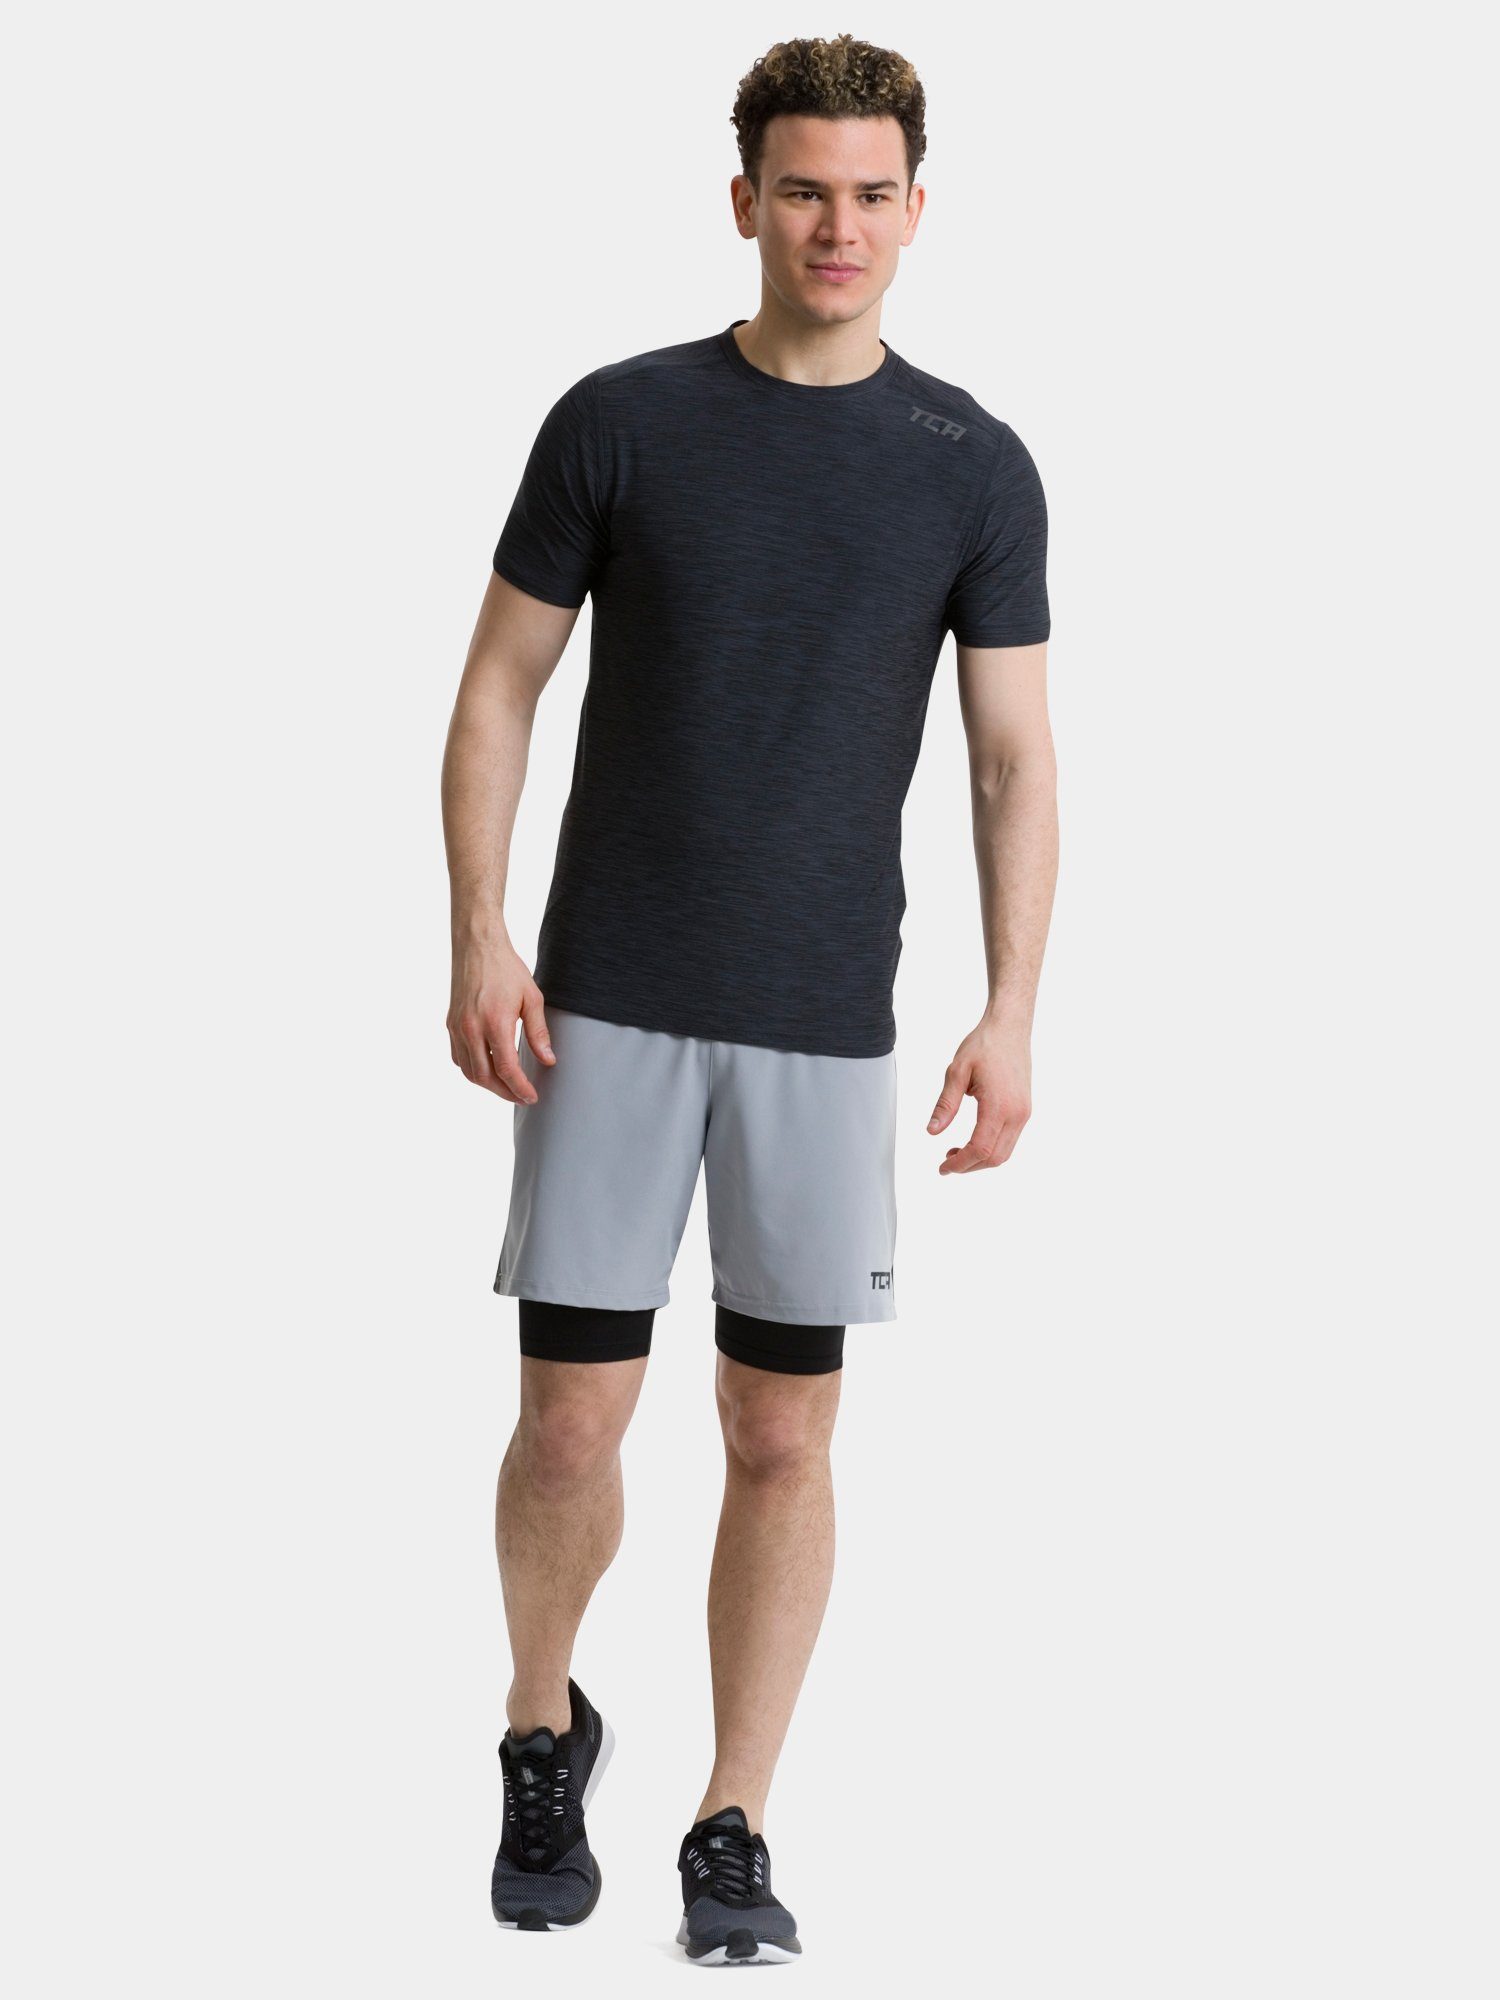 TCA Men's Galaxy Short Sleeve Gym Top - BLack